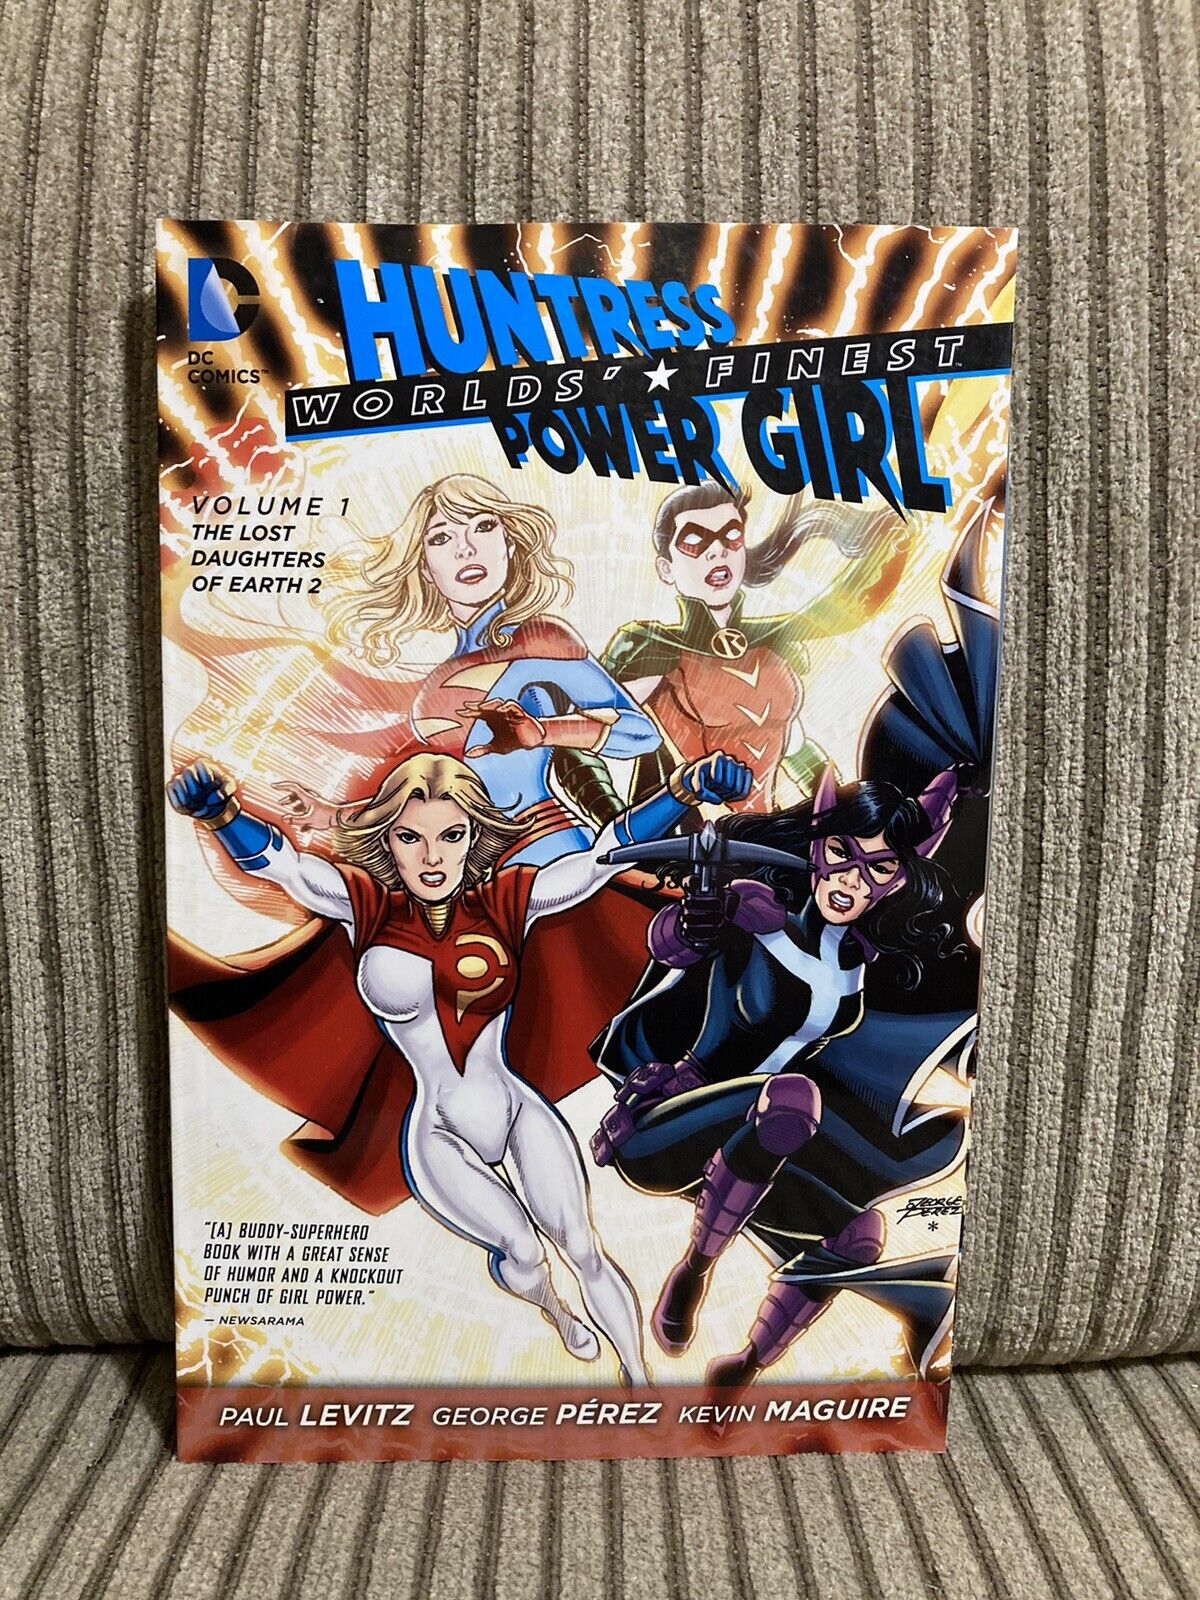 World\'s Finest - Huntress Power Girl Vol. 1 by Paul Levitz 2013, Paperback TPB